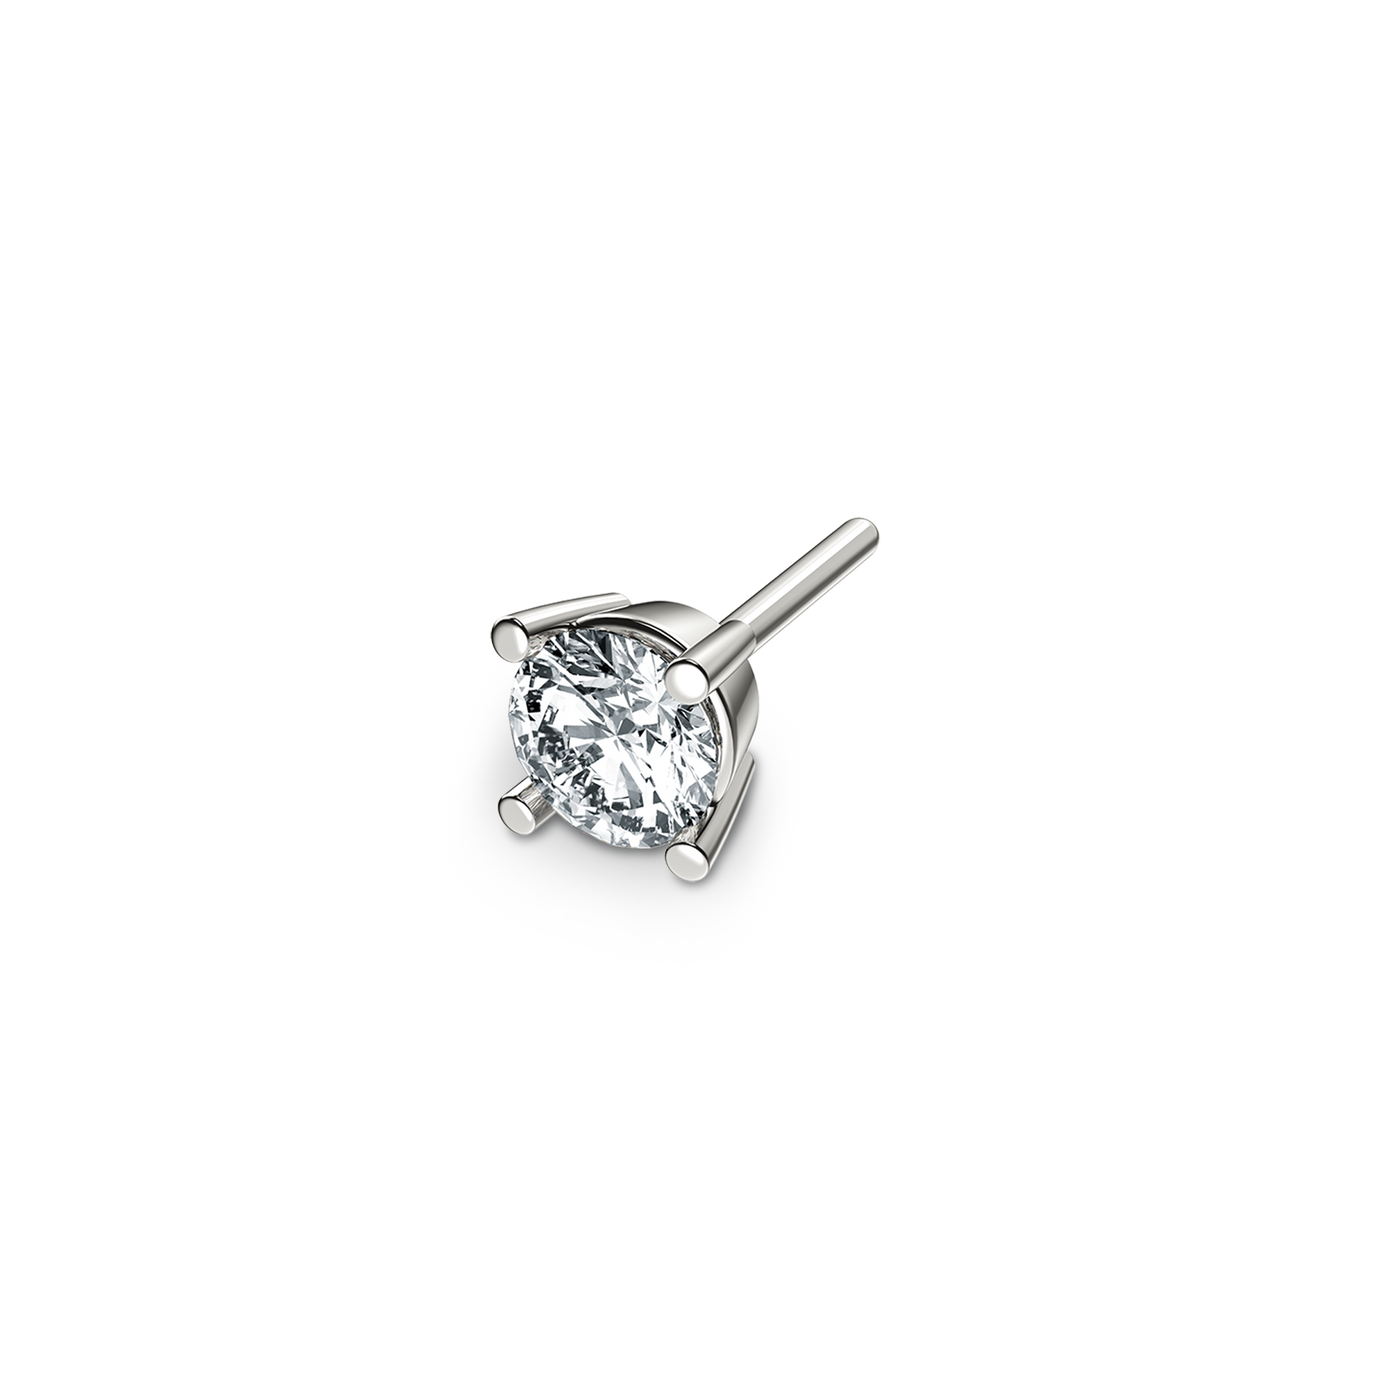 Solitaire Diamond Stud Earrings, 0.4ct